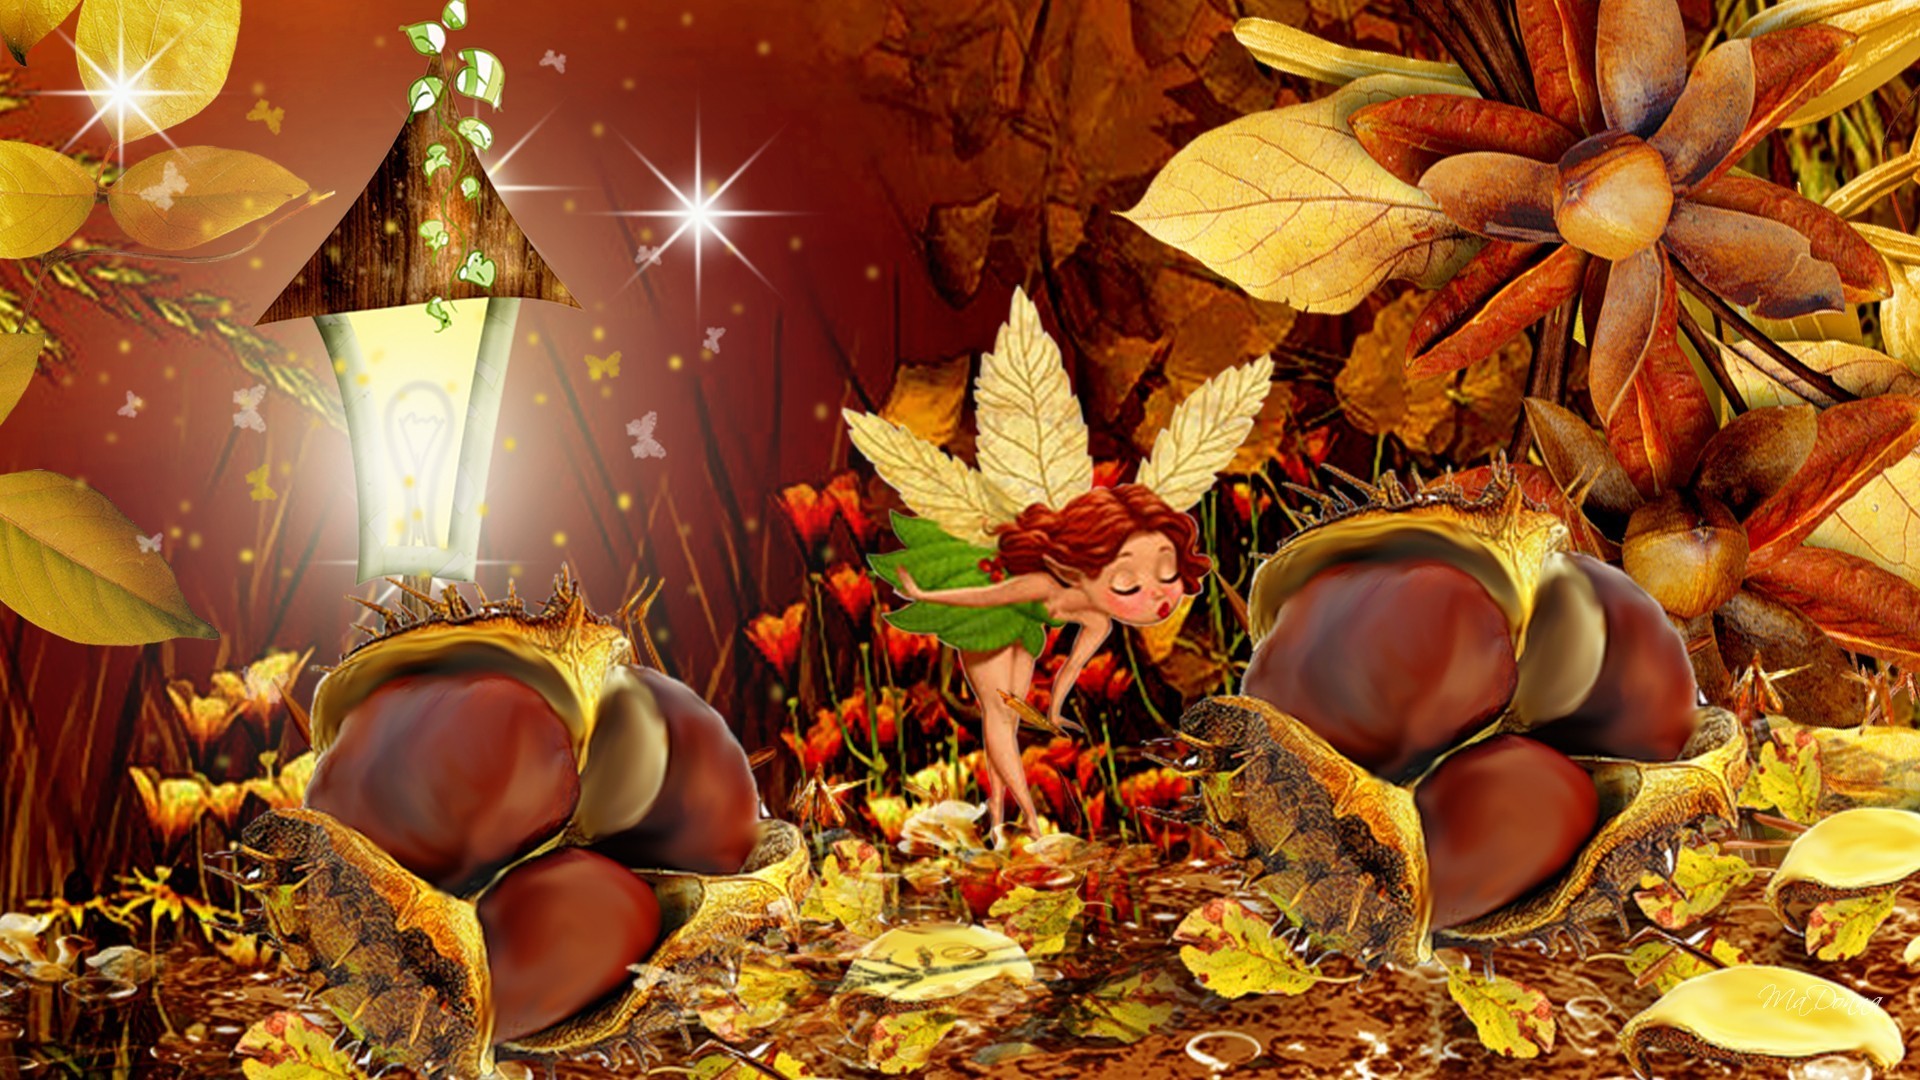 1920x1080 January 6, 2017 - Chestnuts Light Fairy Fall Fantasy Flowers Stars Fancy  Leaves Autumn Nature